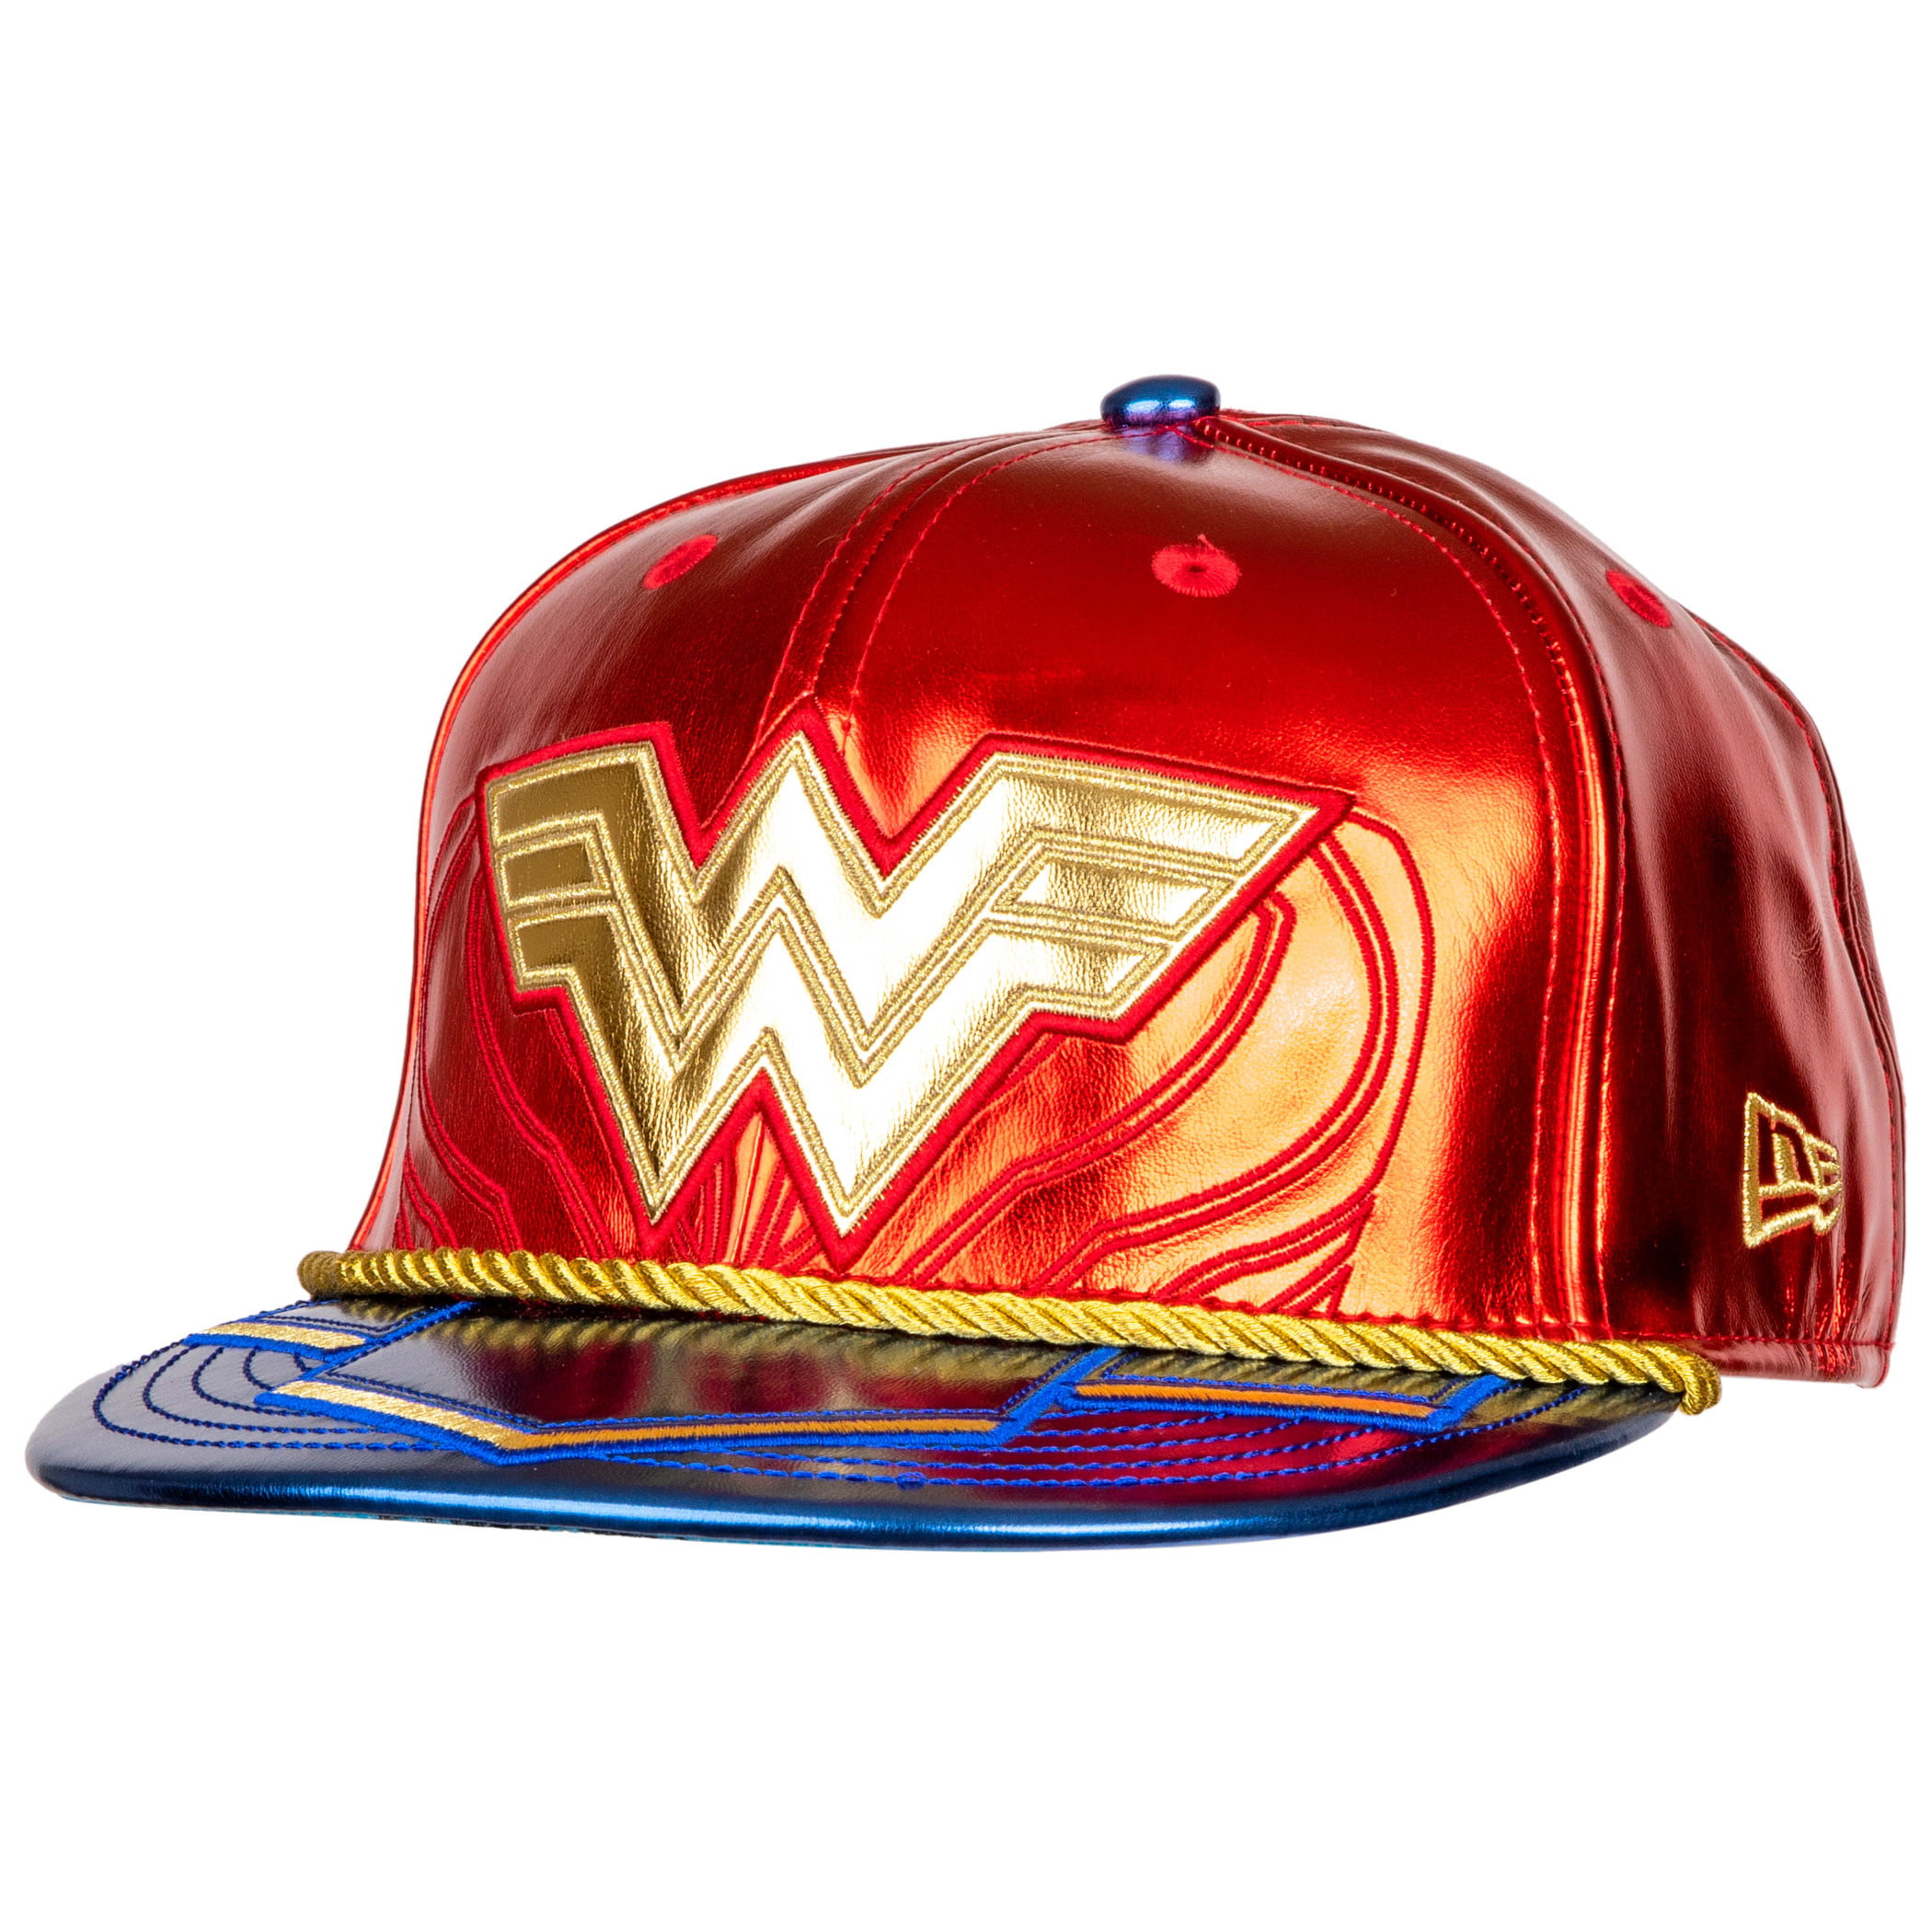 Wonder Woman Baseball Cap,Wonder Woman Logo Hat,Embroidered Design